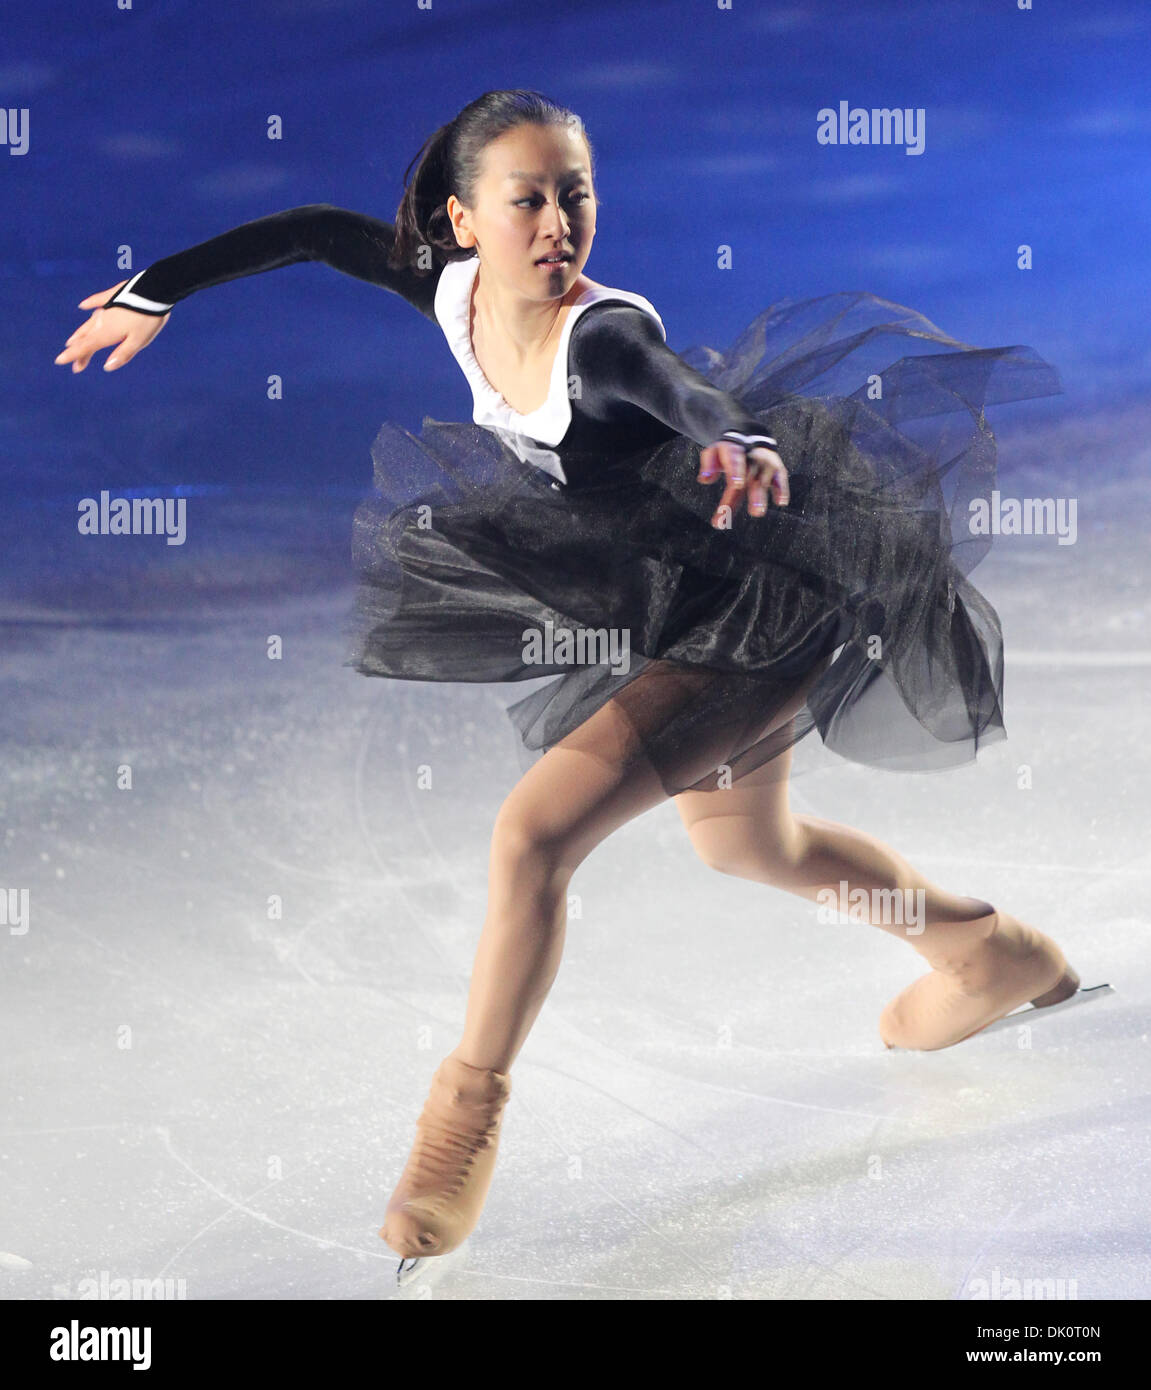 8 janvier 2011 - Osaka, Japon - MAO ASADA du Japon s'effectue au cours de la Stars on Ice au Namihaya Dome à Osaka, Japon. (Crédit Image : © Junko Kimura/Jana Press/ZUMAPRESS.com) Banque D'Images